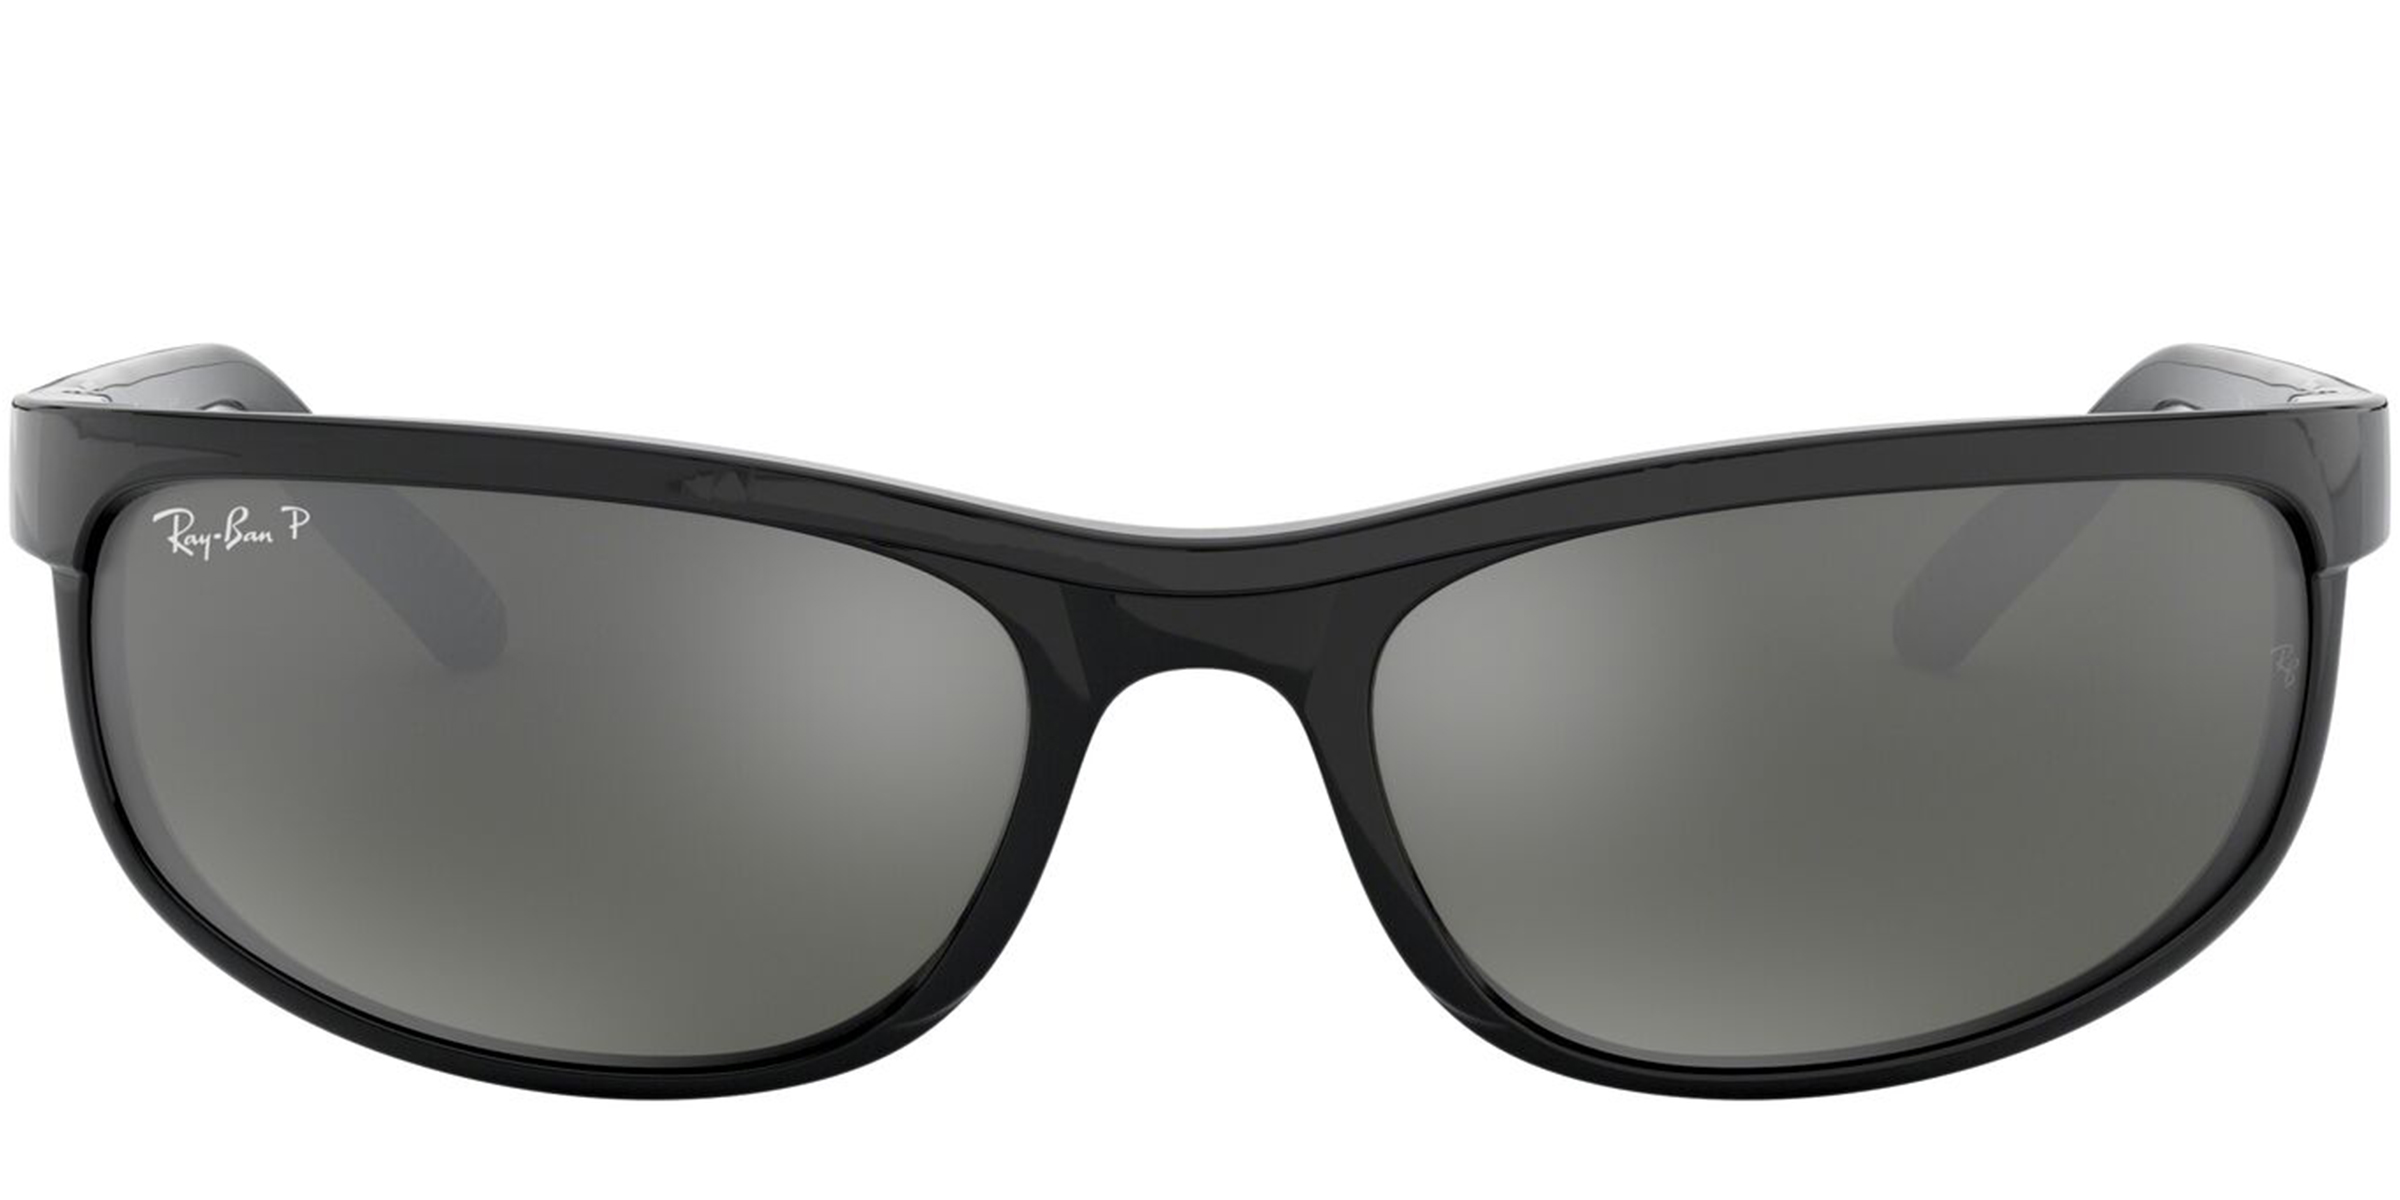 Buy Ray-Ban RB2027 PREDATOR 2 sunglasses for men at For Eyes